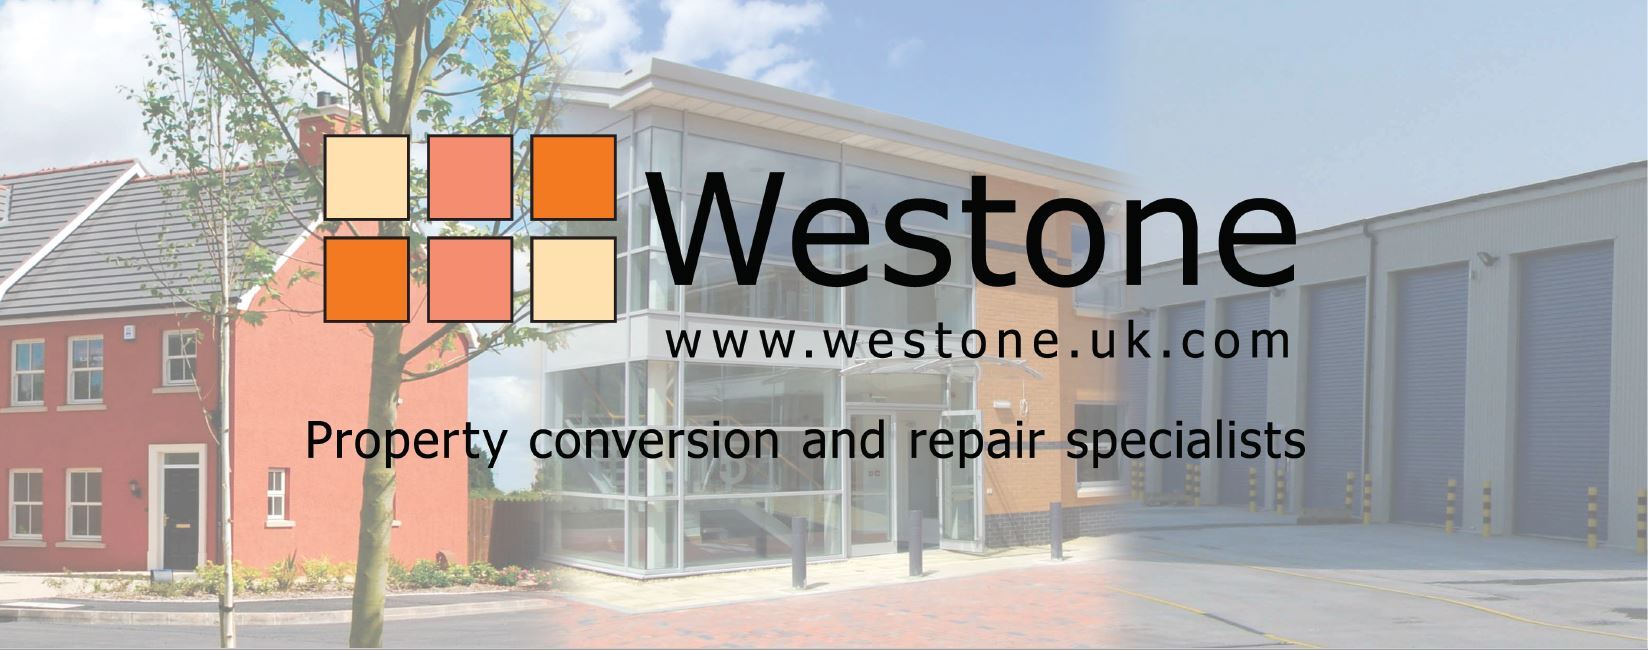 Westone Housing Site Inspection